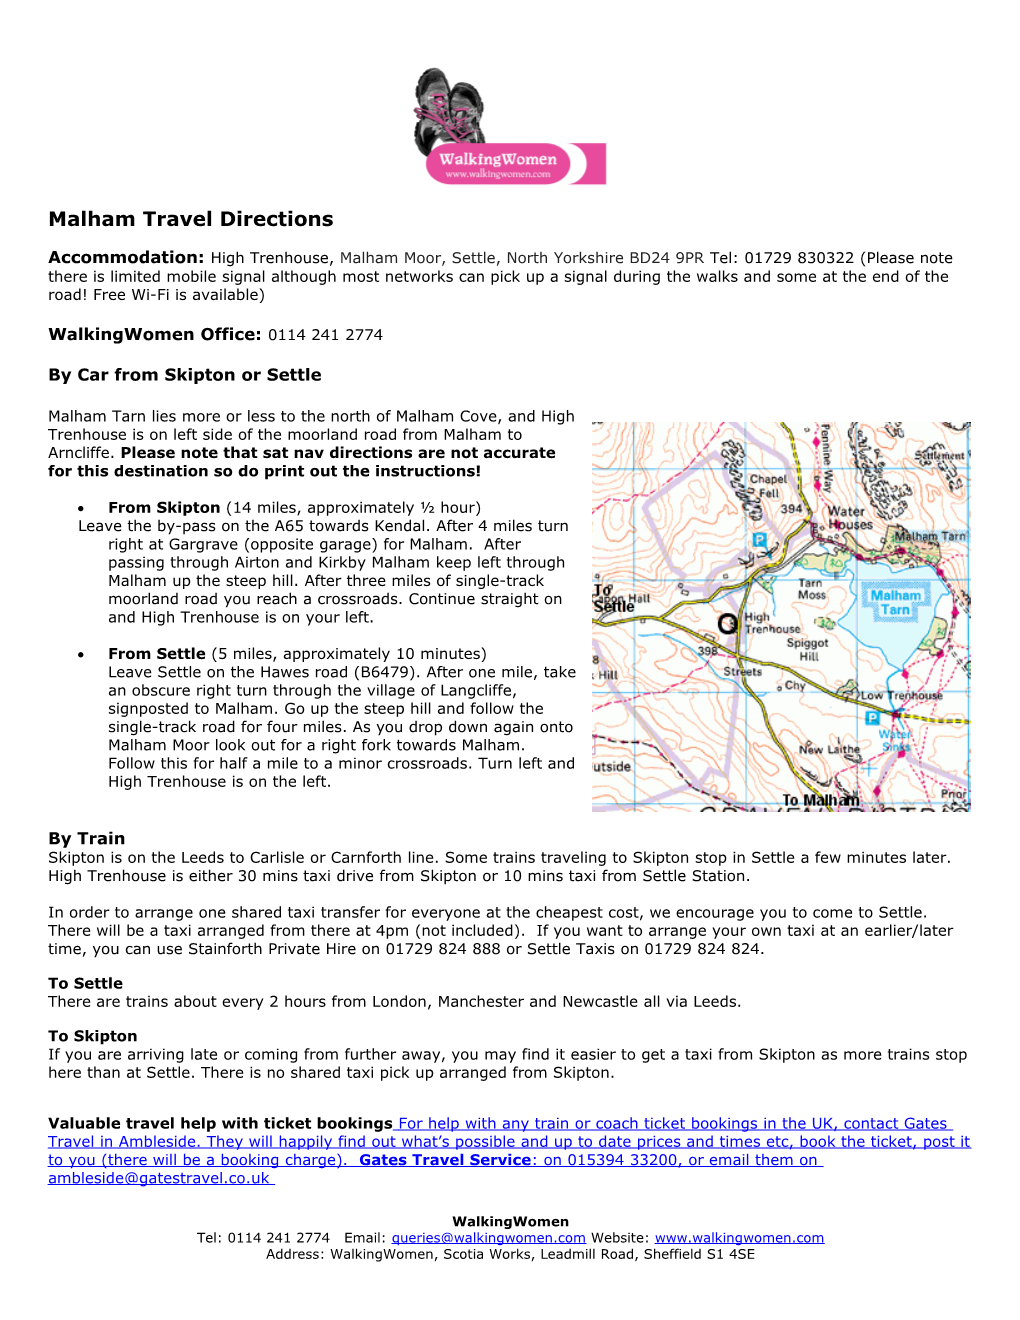 Travel Directions to High Trenhouse, Malham